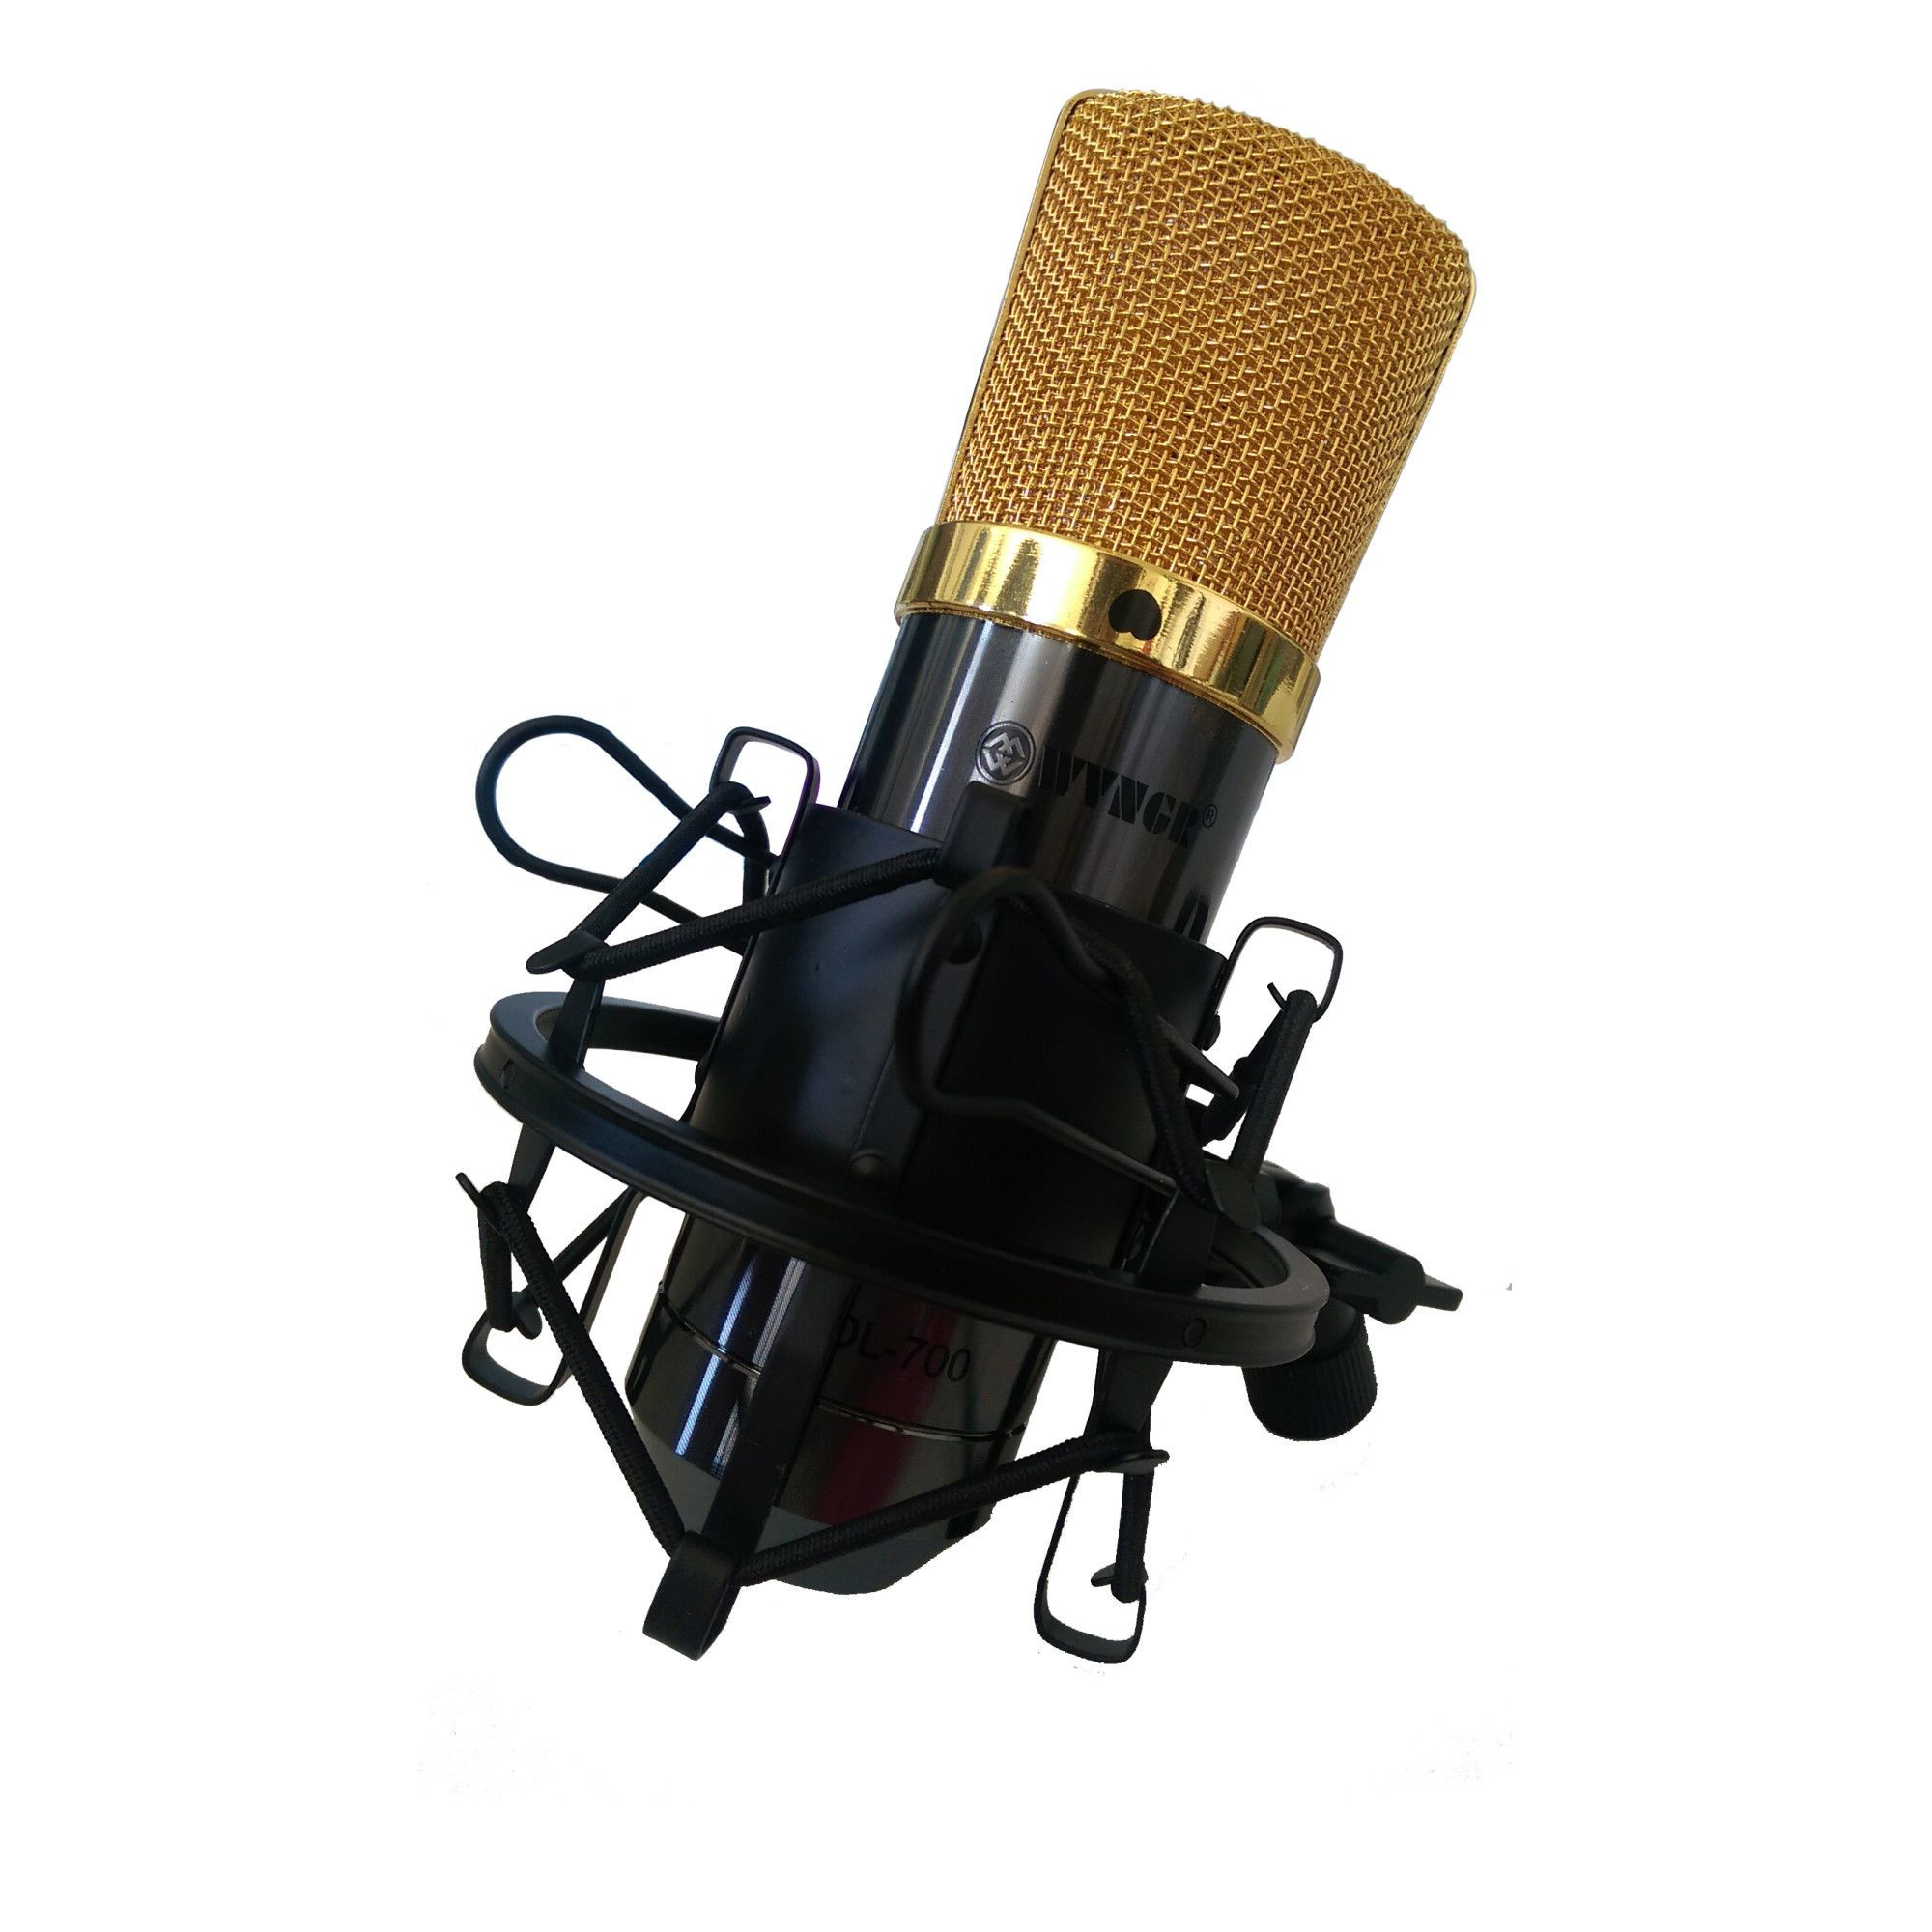 Microfon profesional cu fir dl-700 cu alimentator